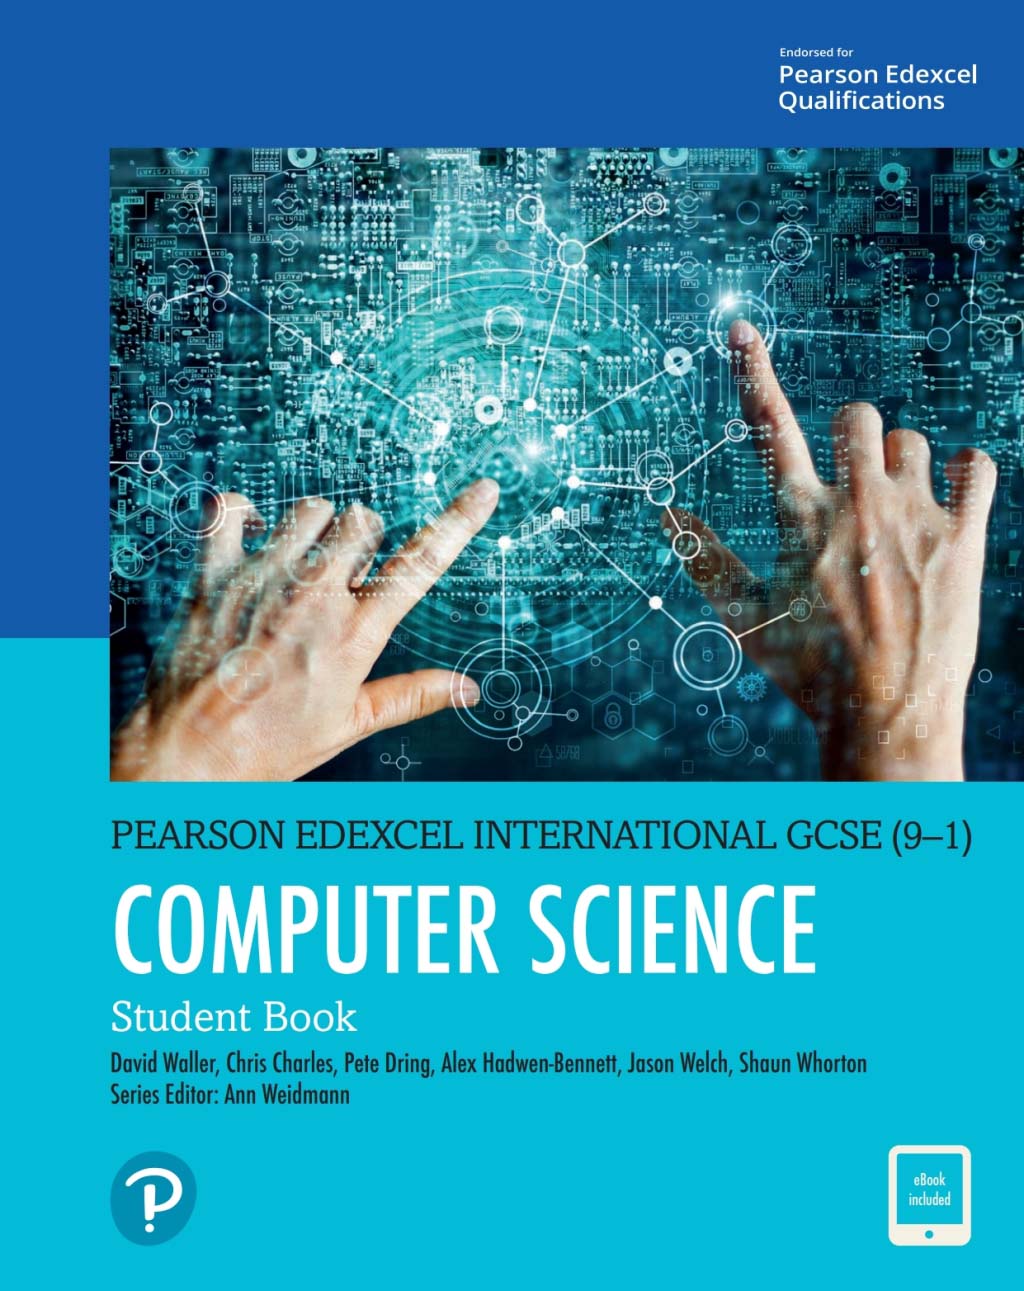 Pearson Edexcel International GCSE (9-1) Computer Science Student Book